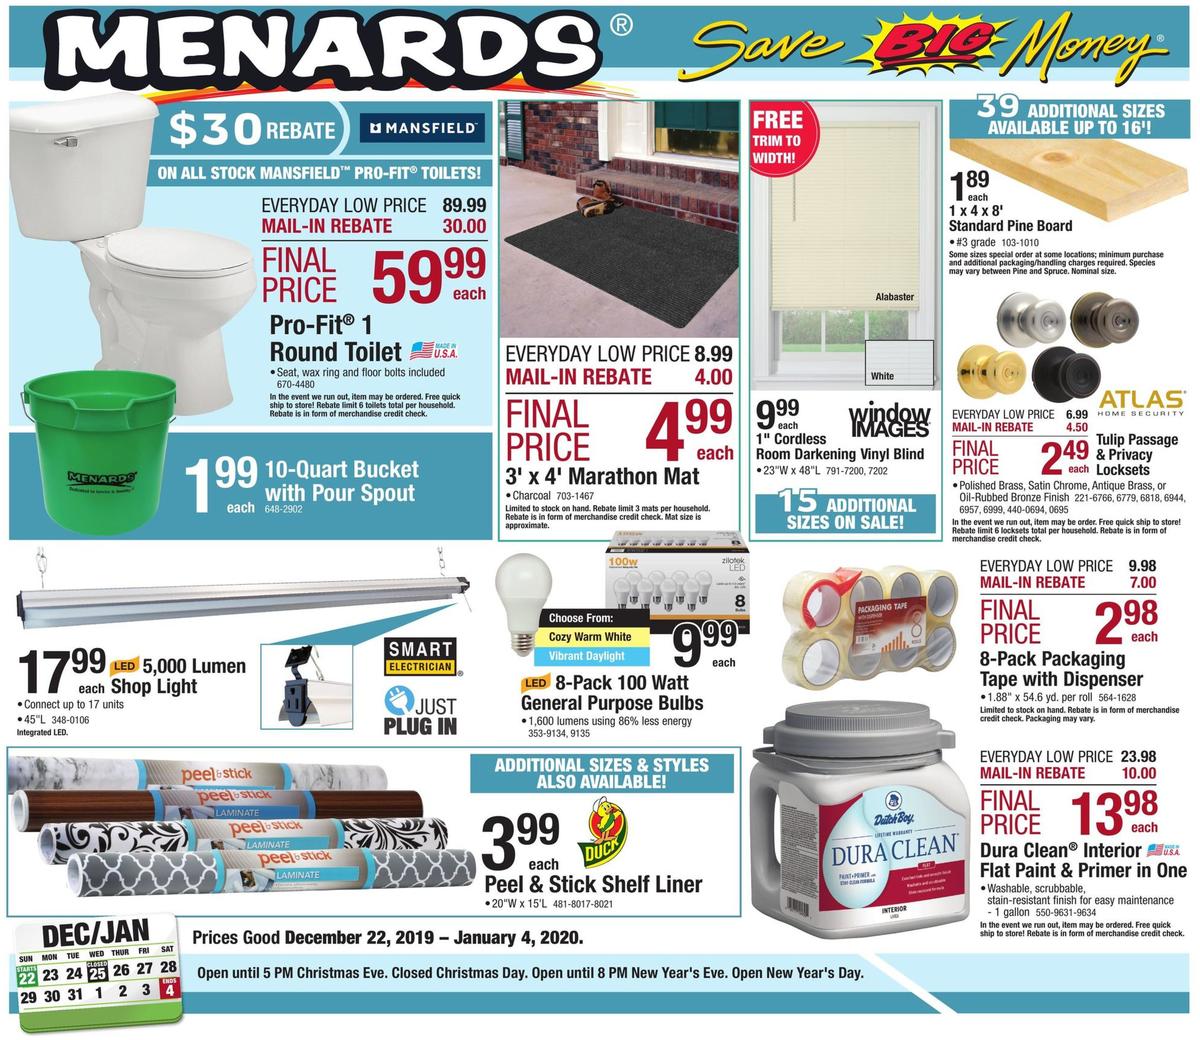 Menards Weekly Ad from December 22